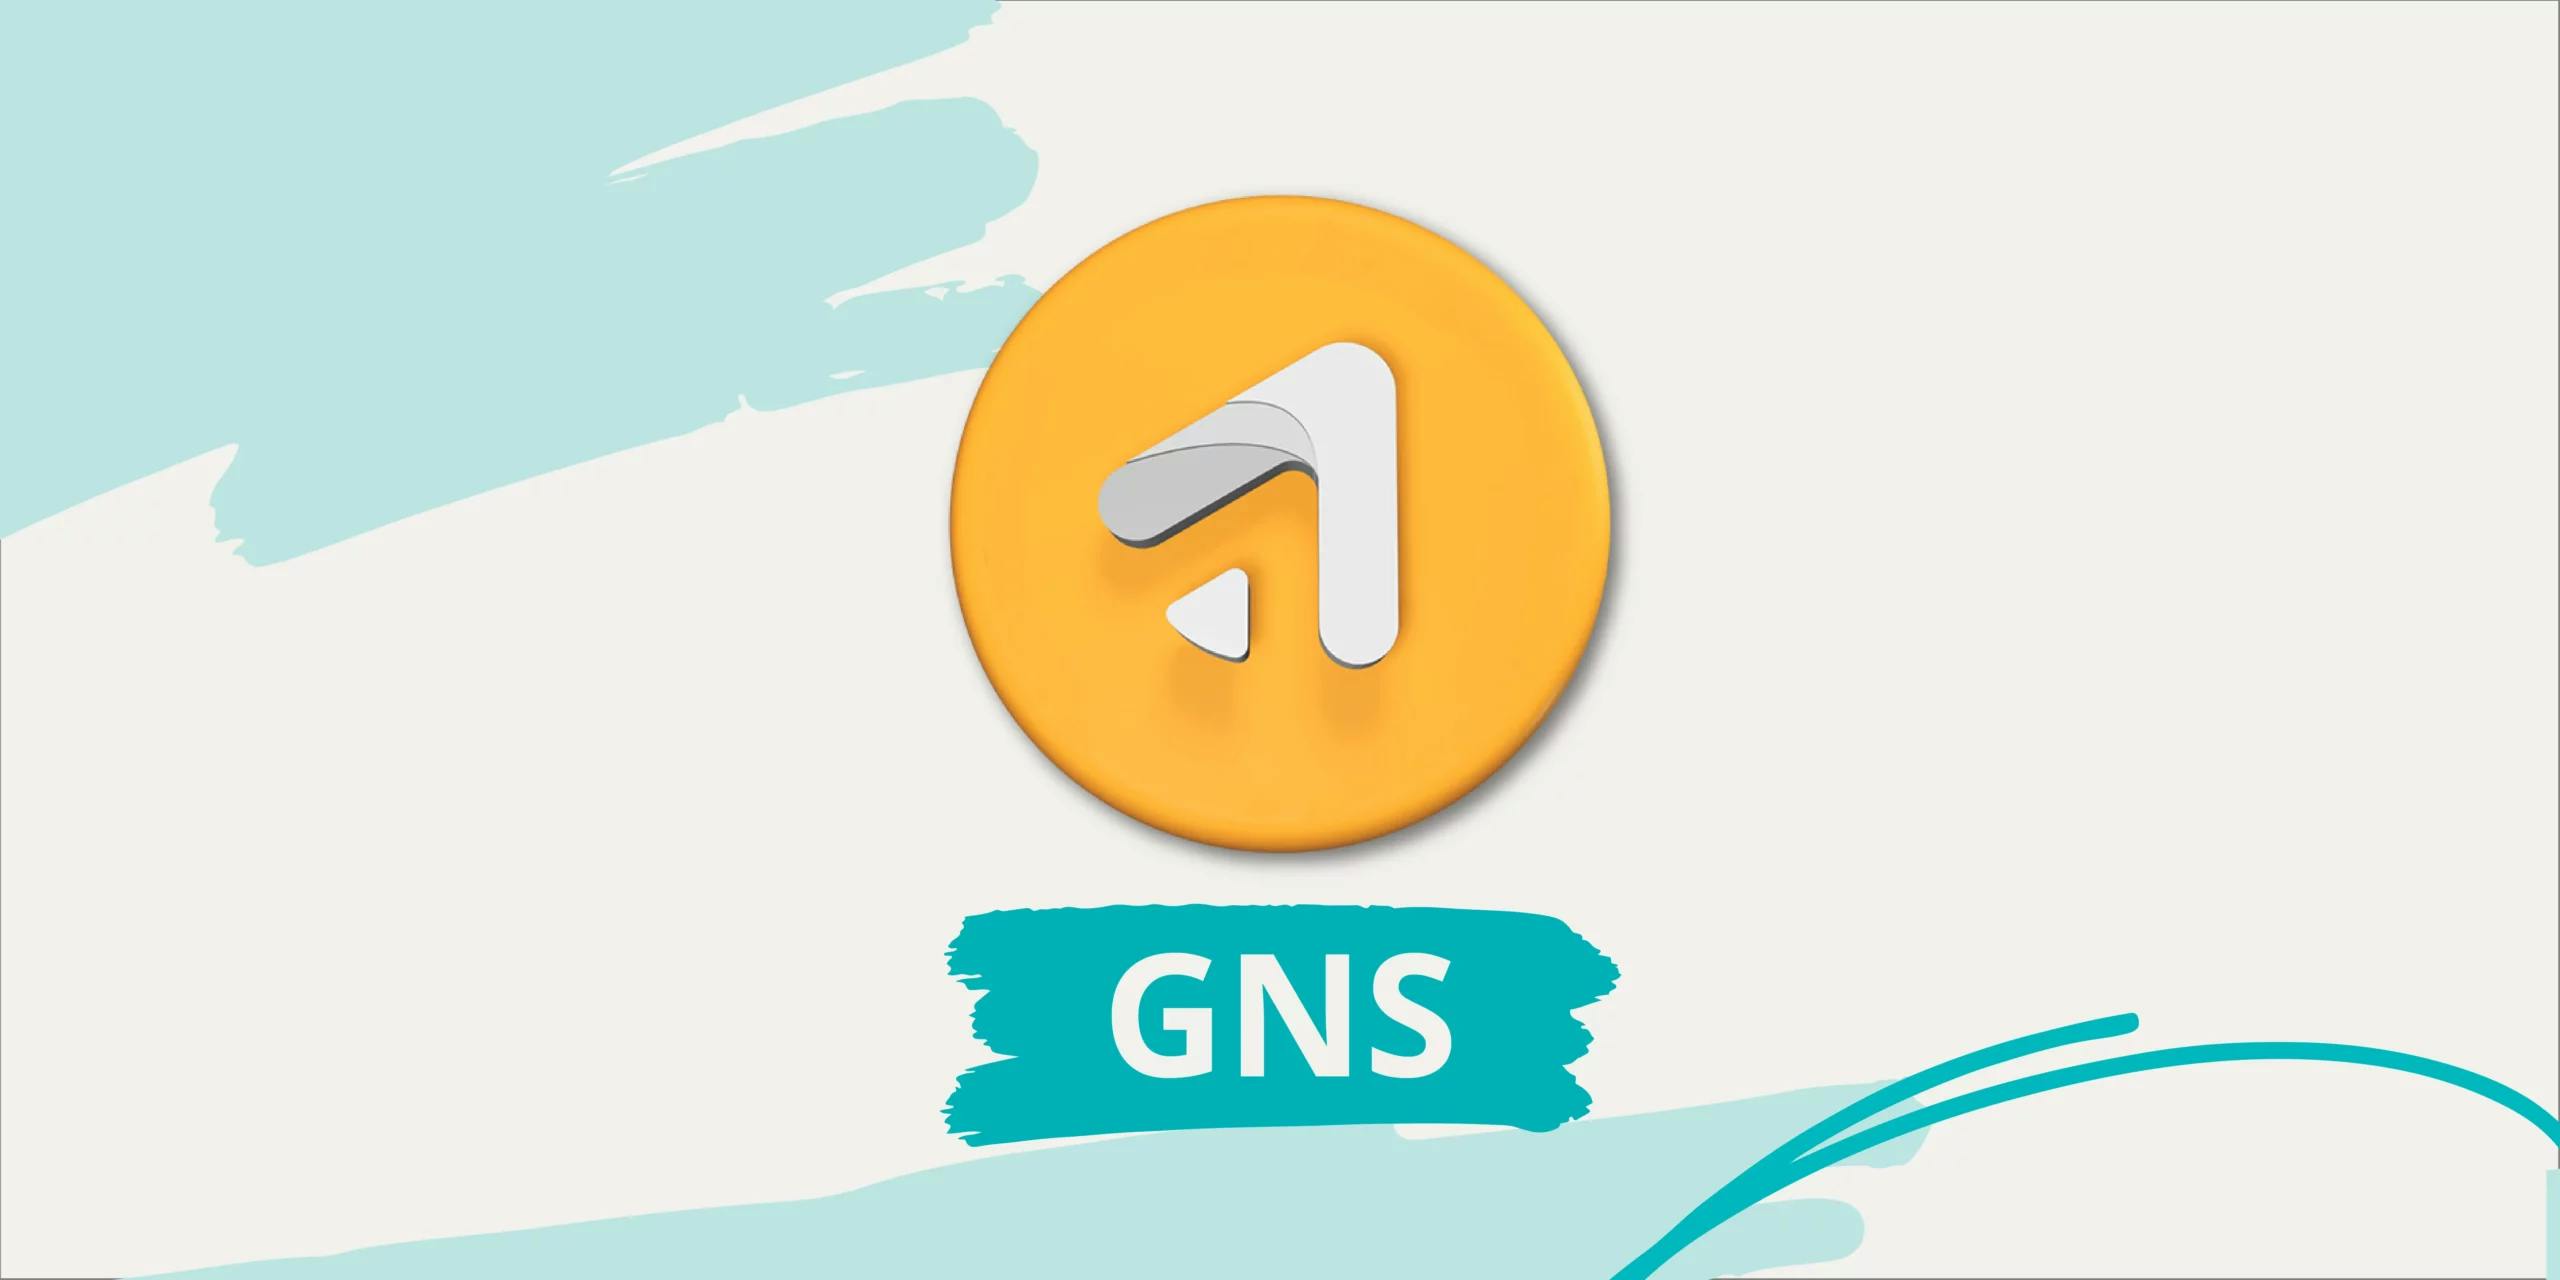 Apa itu Gains Network?